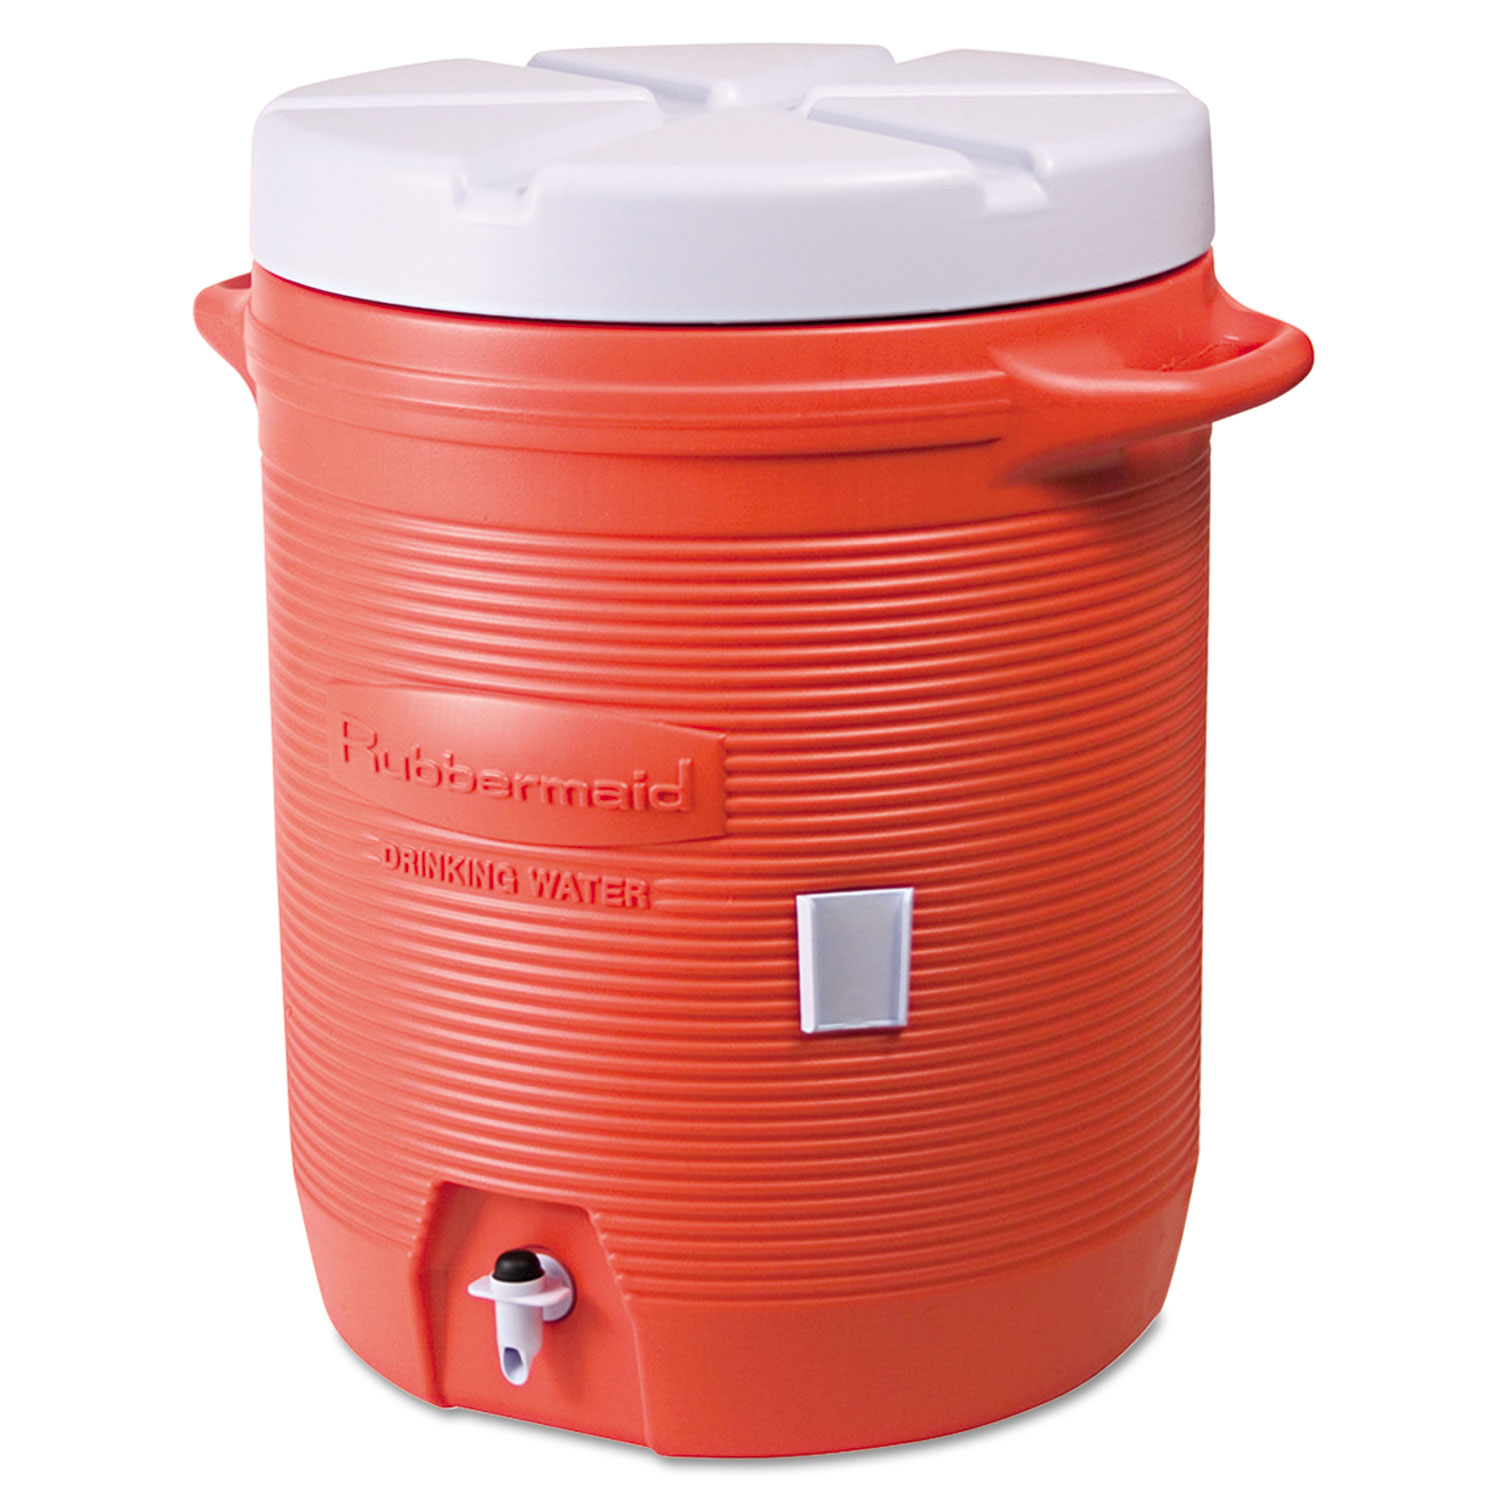 Insulated Beverage Container, 10gal, 16 dia x 20 1/2h, Orange/White